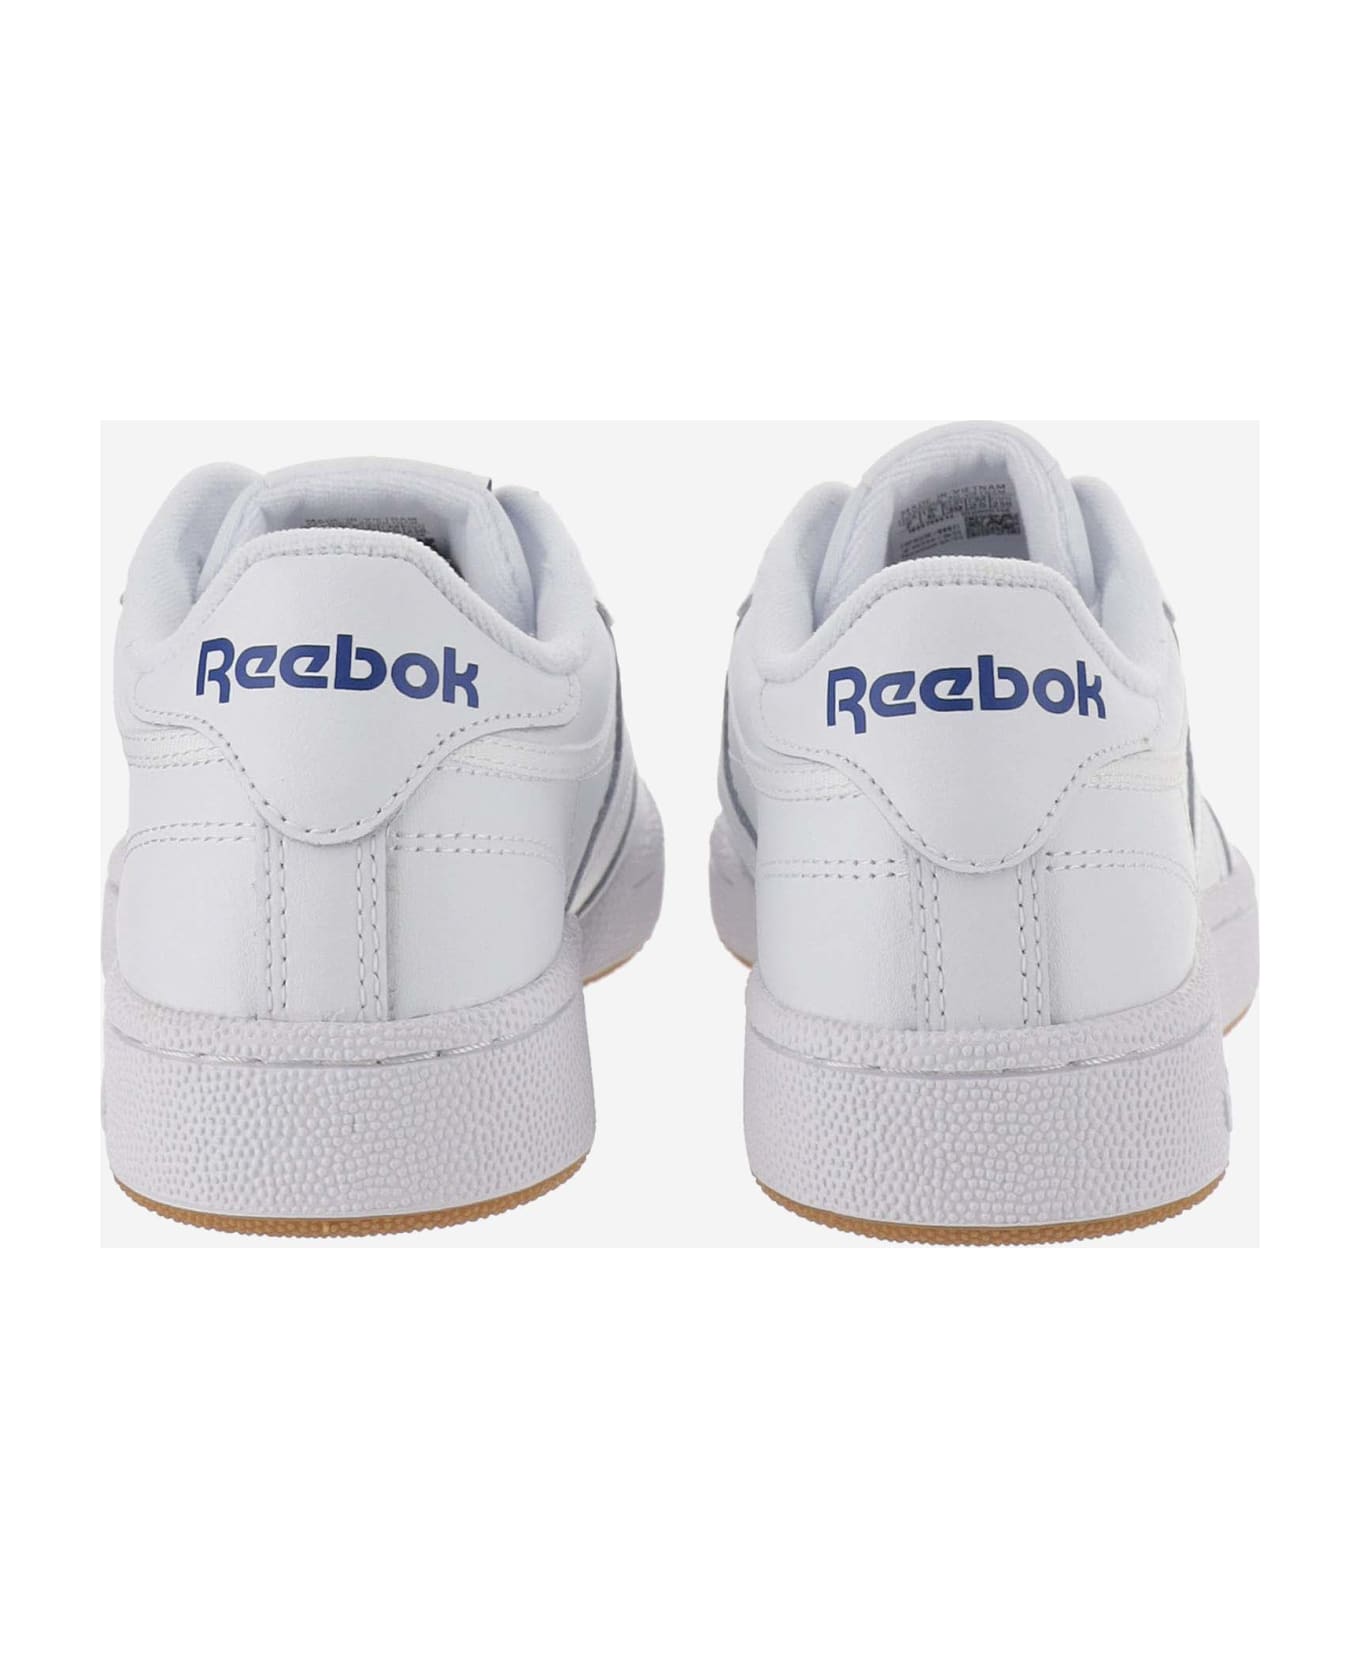 Reebok Club C 85 Leather Sneakers - White